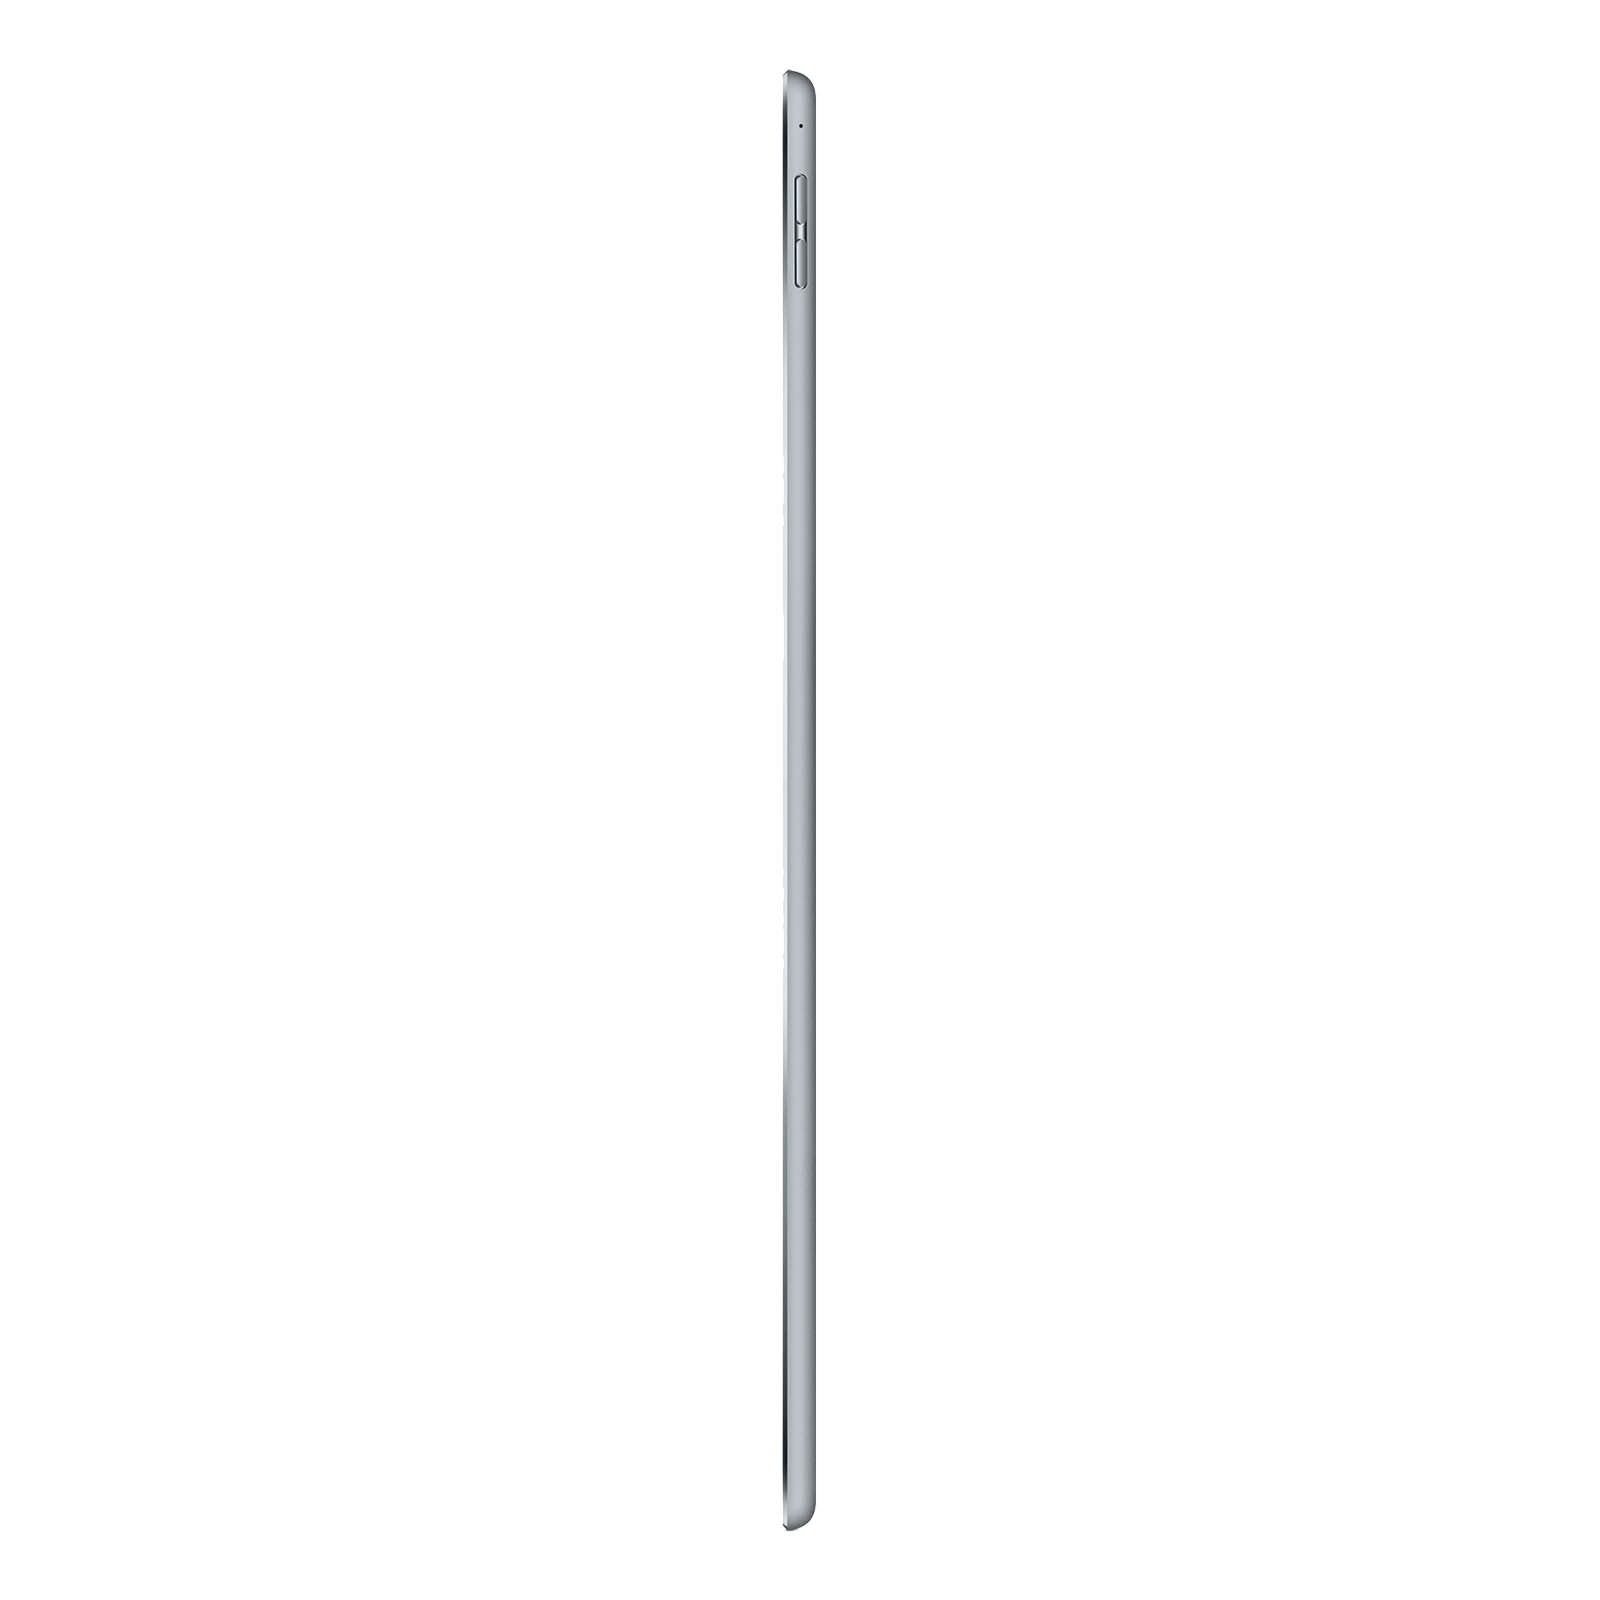 iPad Pro 12.9 Inch 2nd Gen 64GB Space Grey Pristine - Unlocked